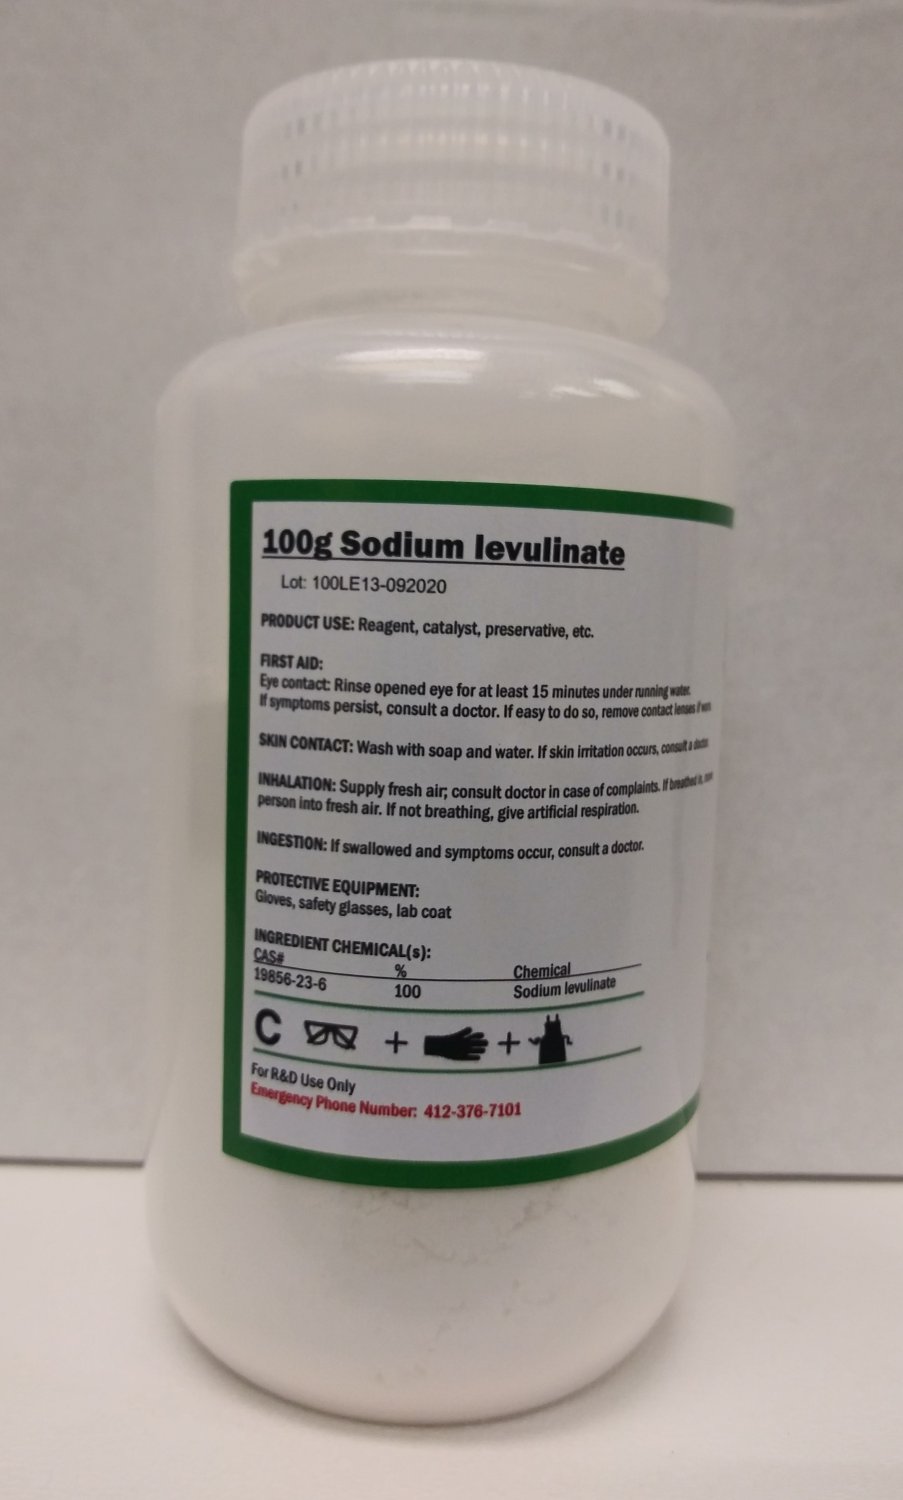 100g sodium levulinate